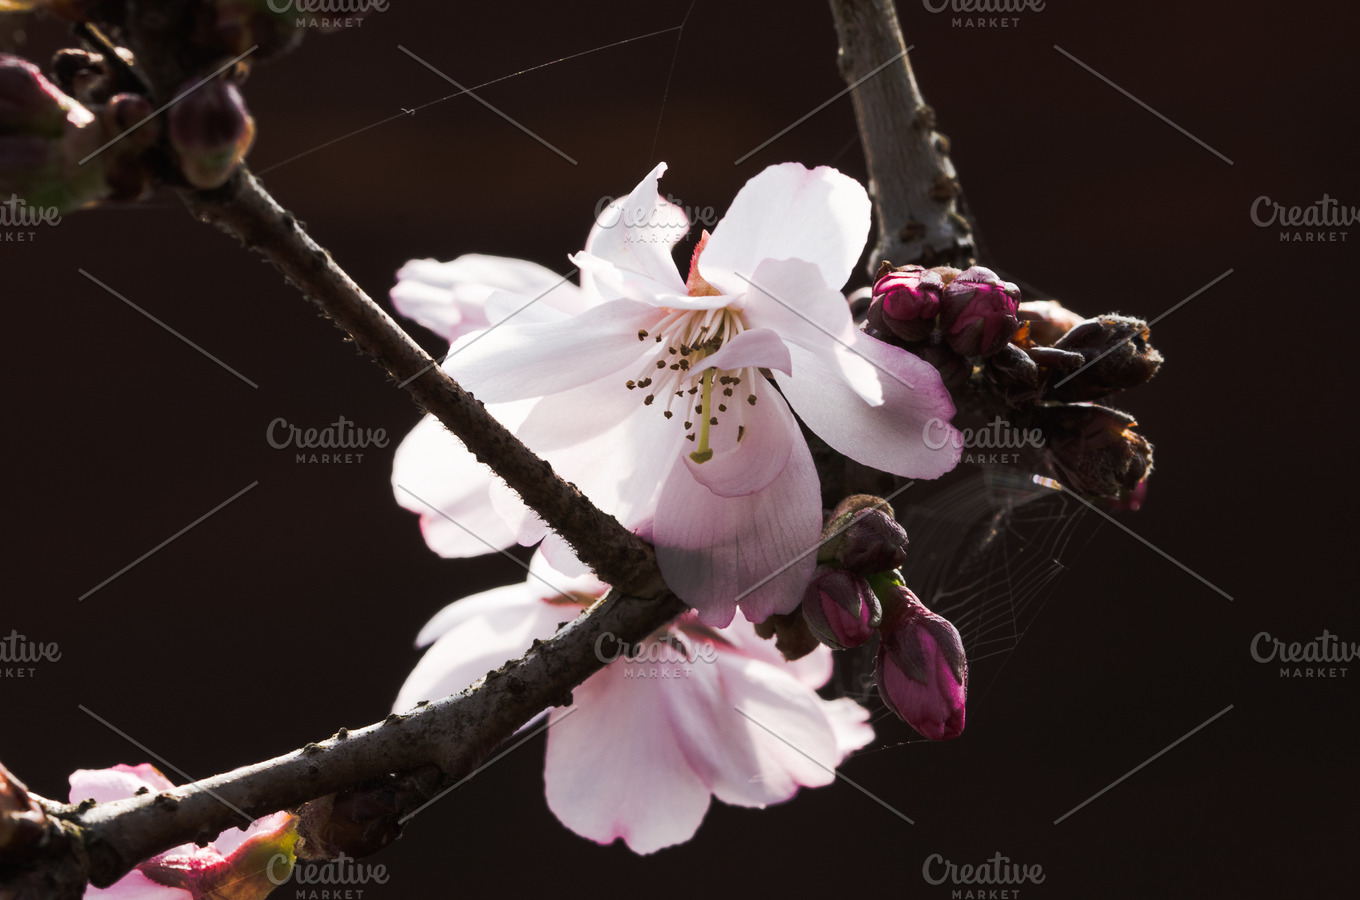 Cherry blossom on a dark background ~ Photos ~ Creative Market